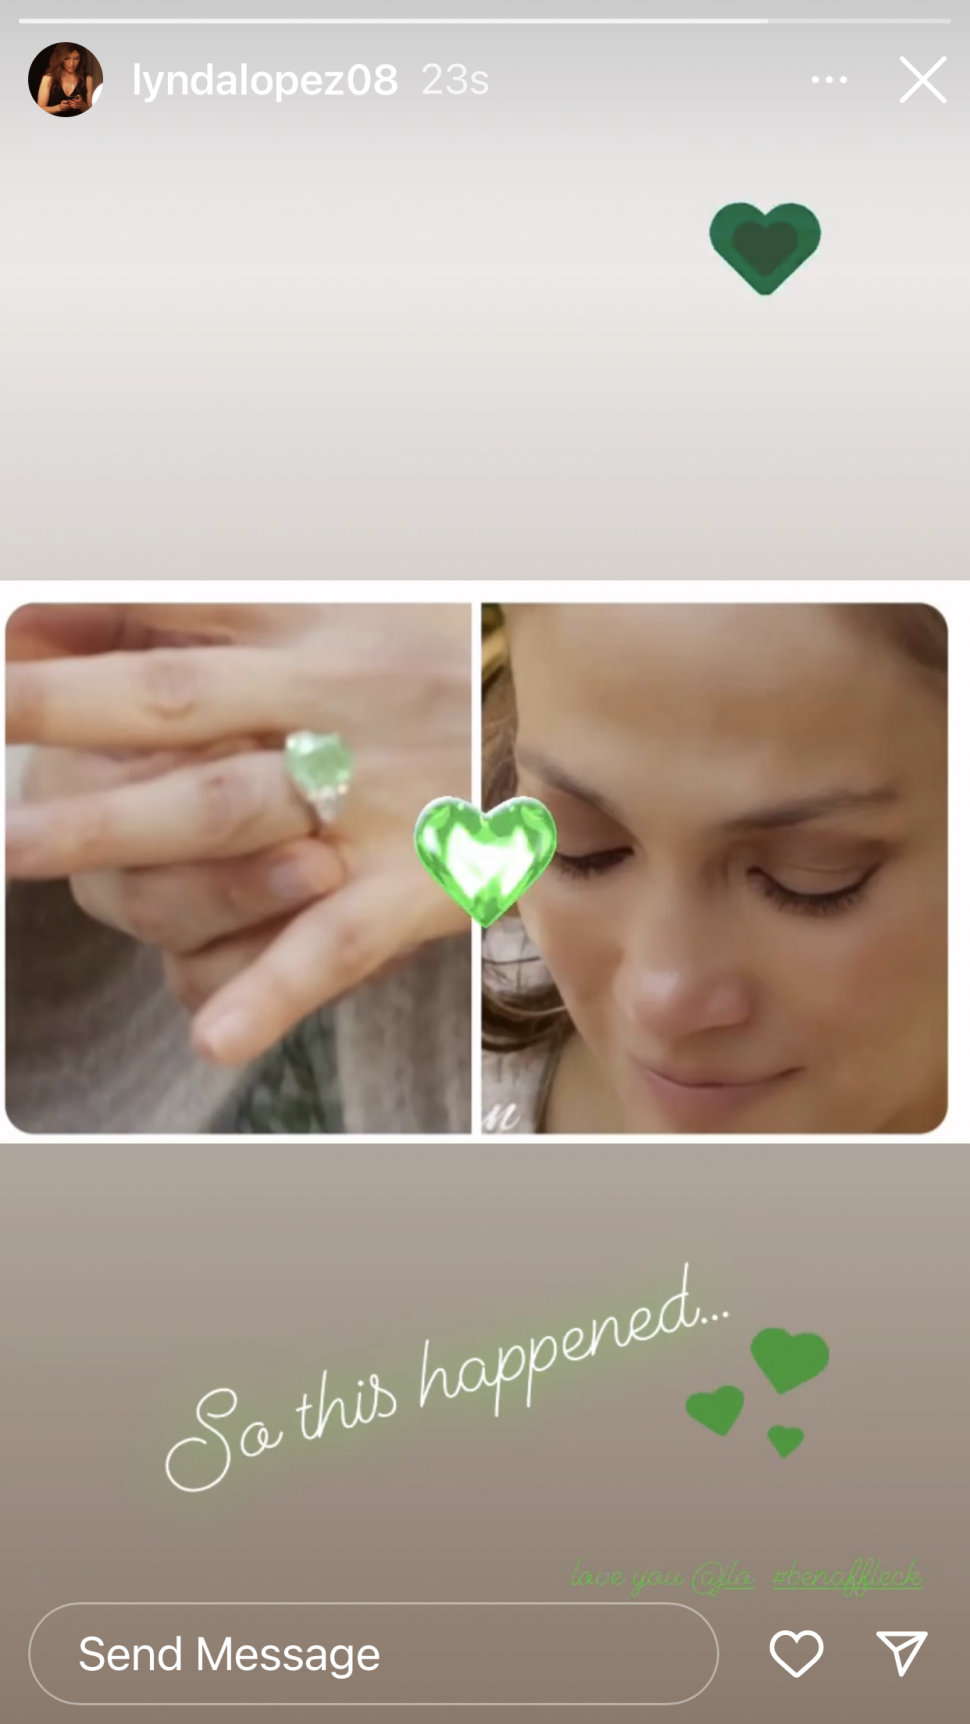 Jennifer Lopez's engagement ring